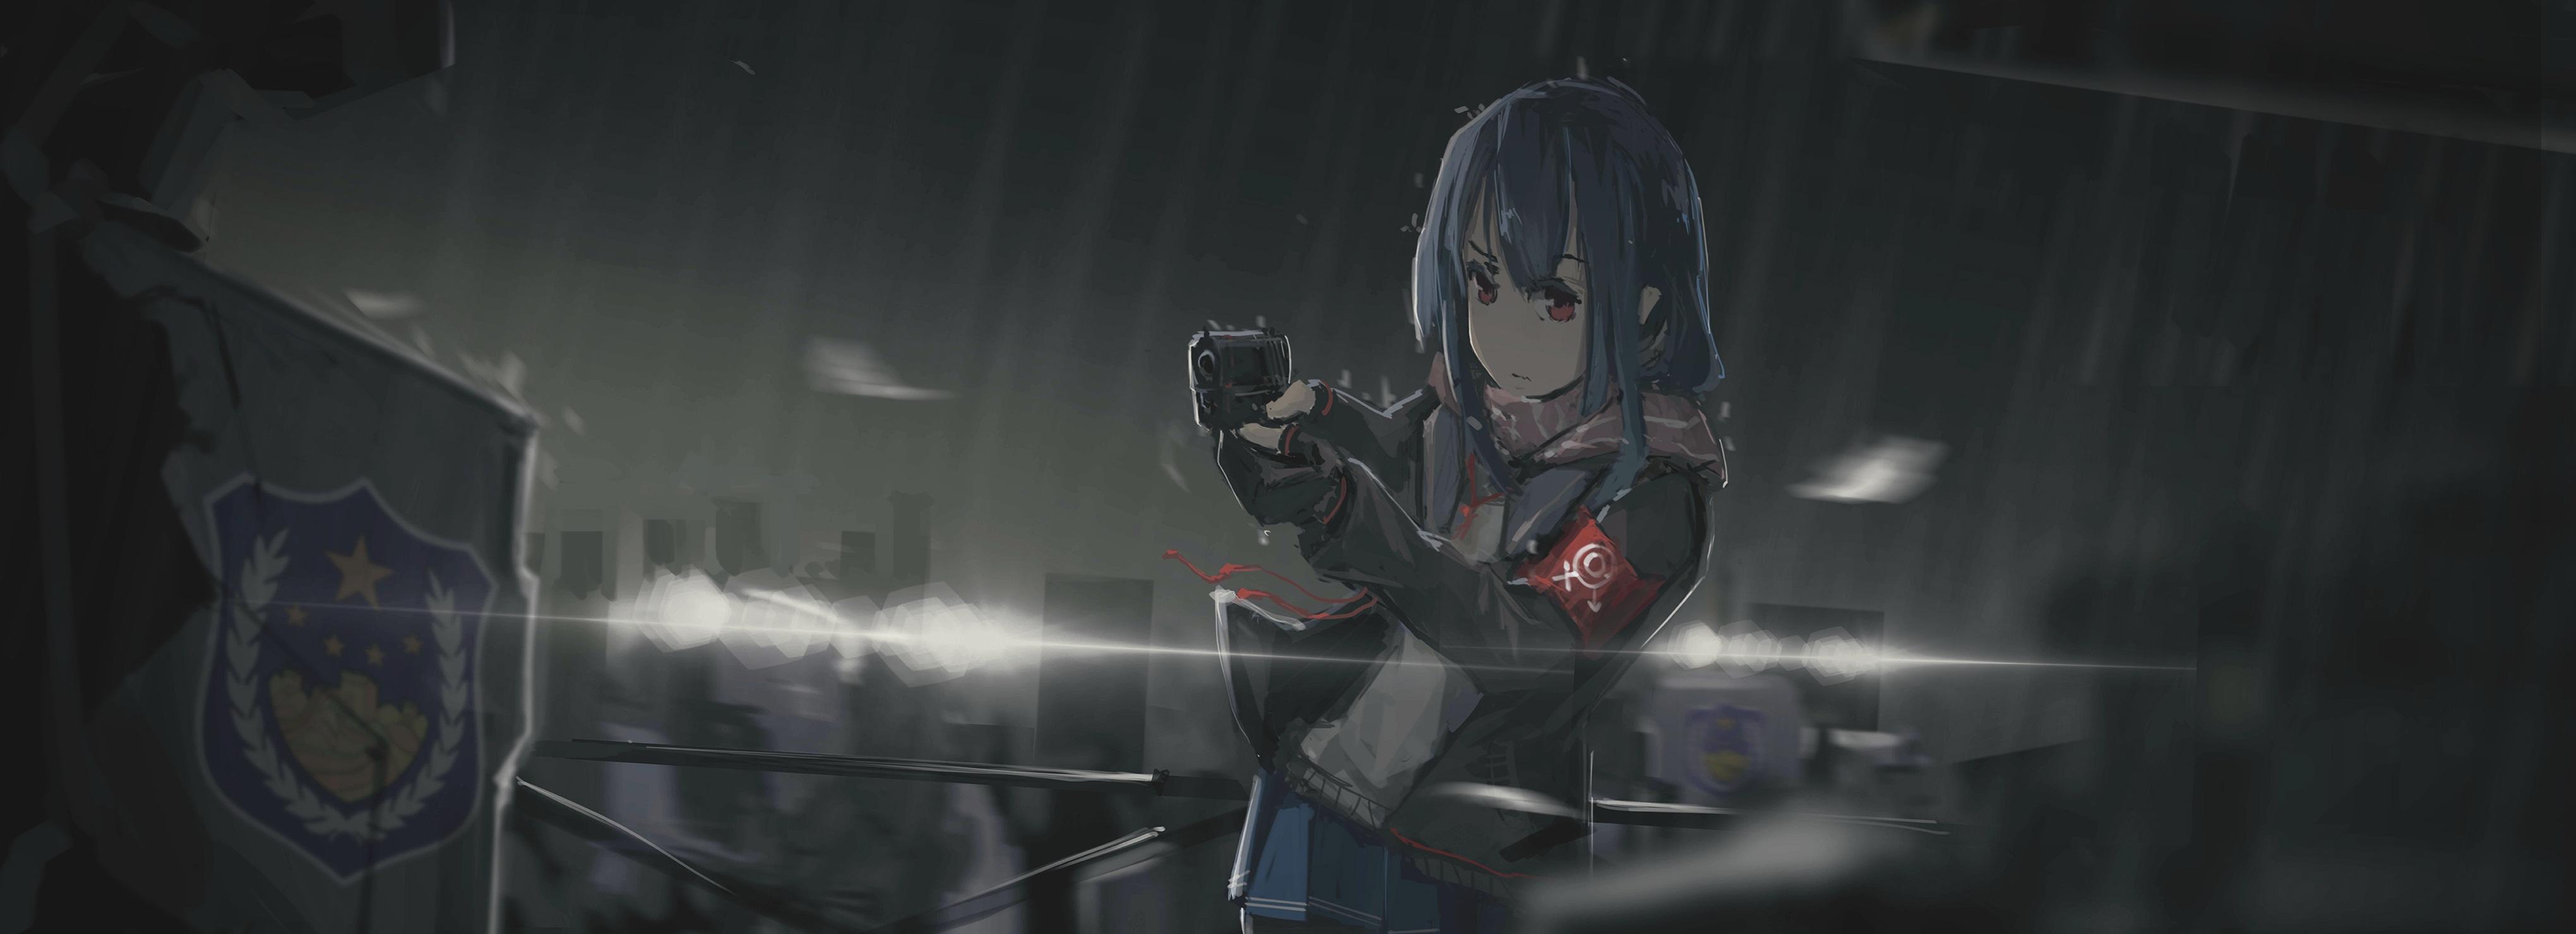 Anime Girl In Police Car Wallpapers